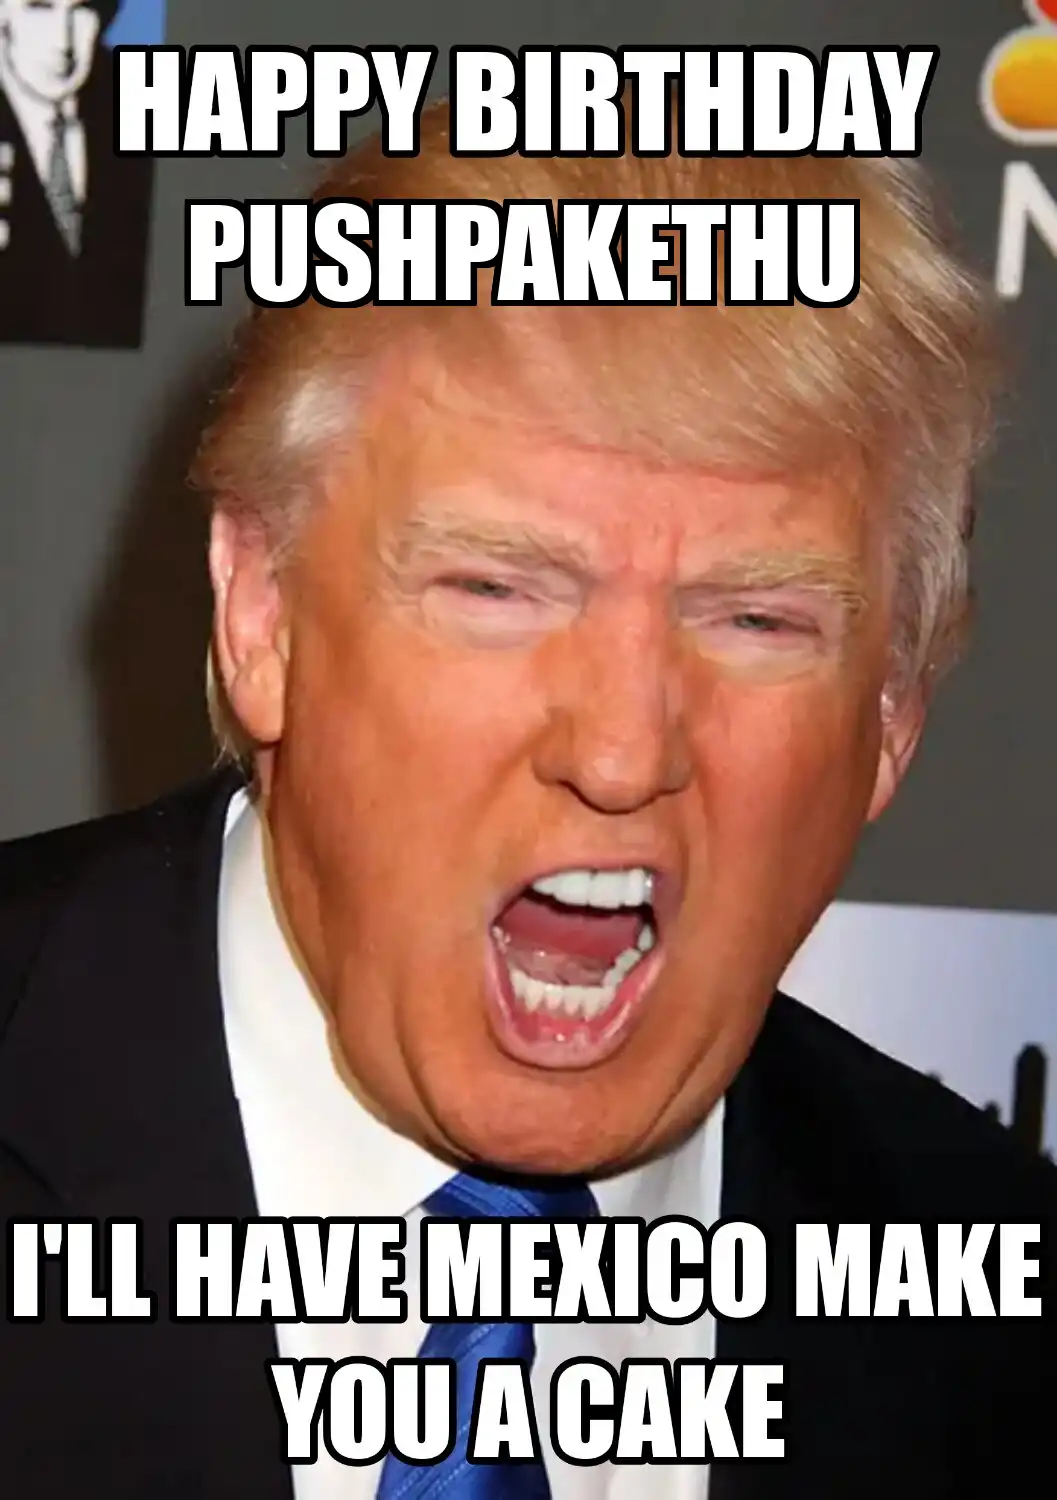 Happy Birthday Pushpakethu Mexico Make You A Cake Meme